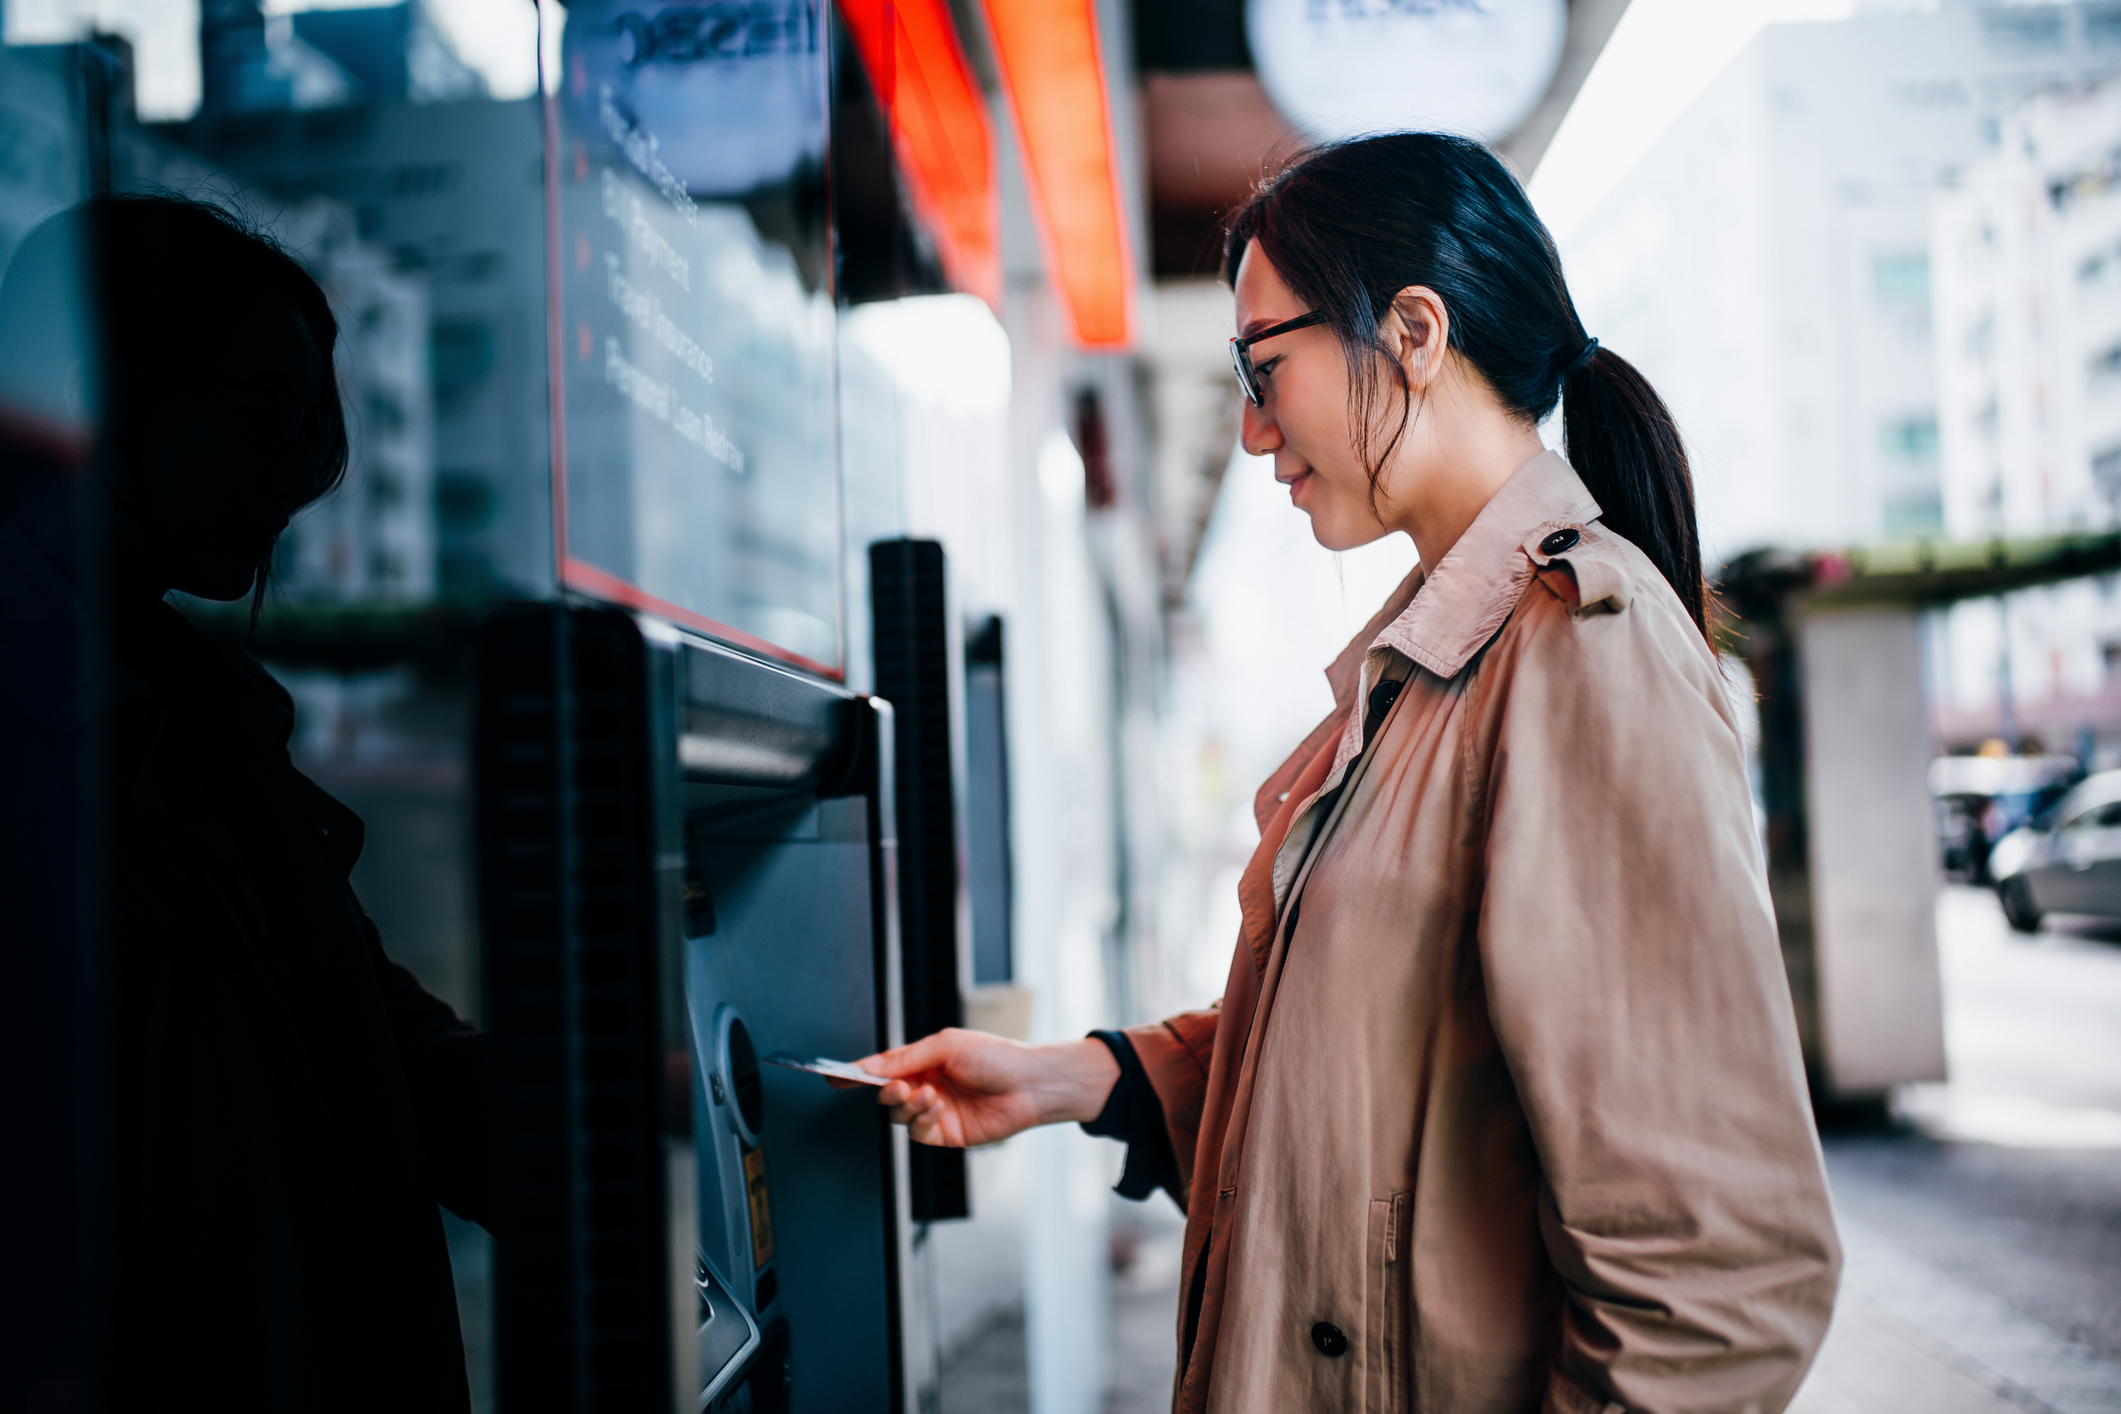 Women inserting debit card into ATM.